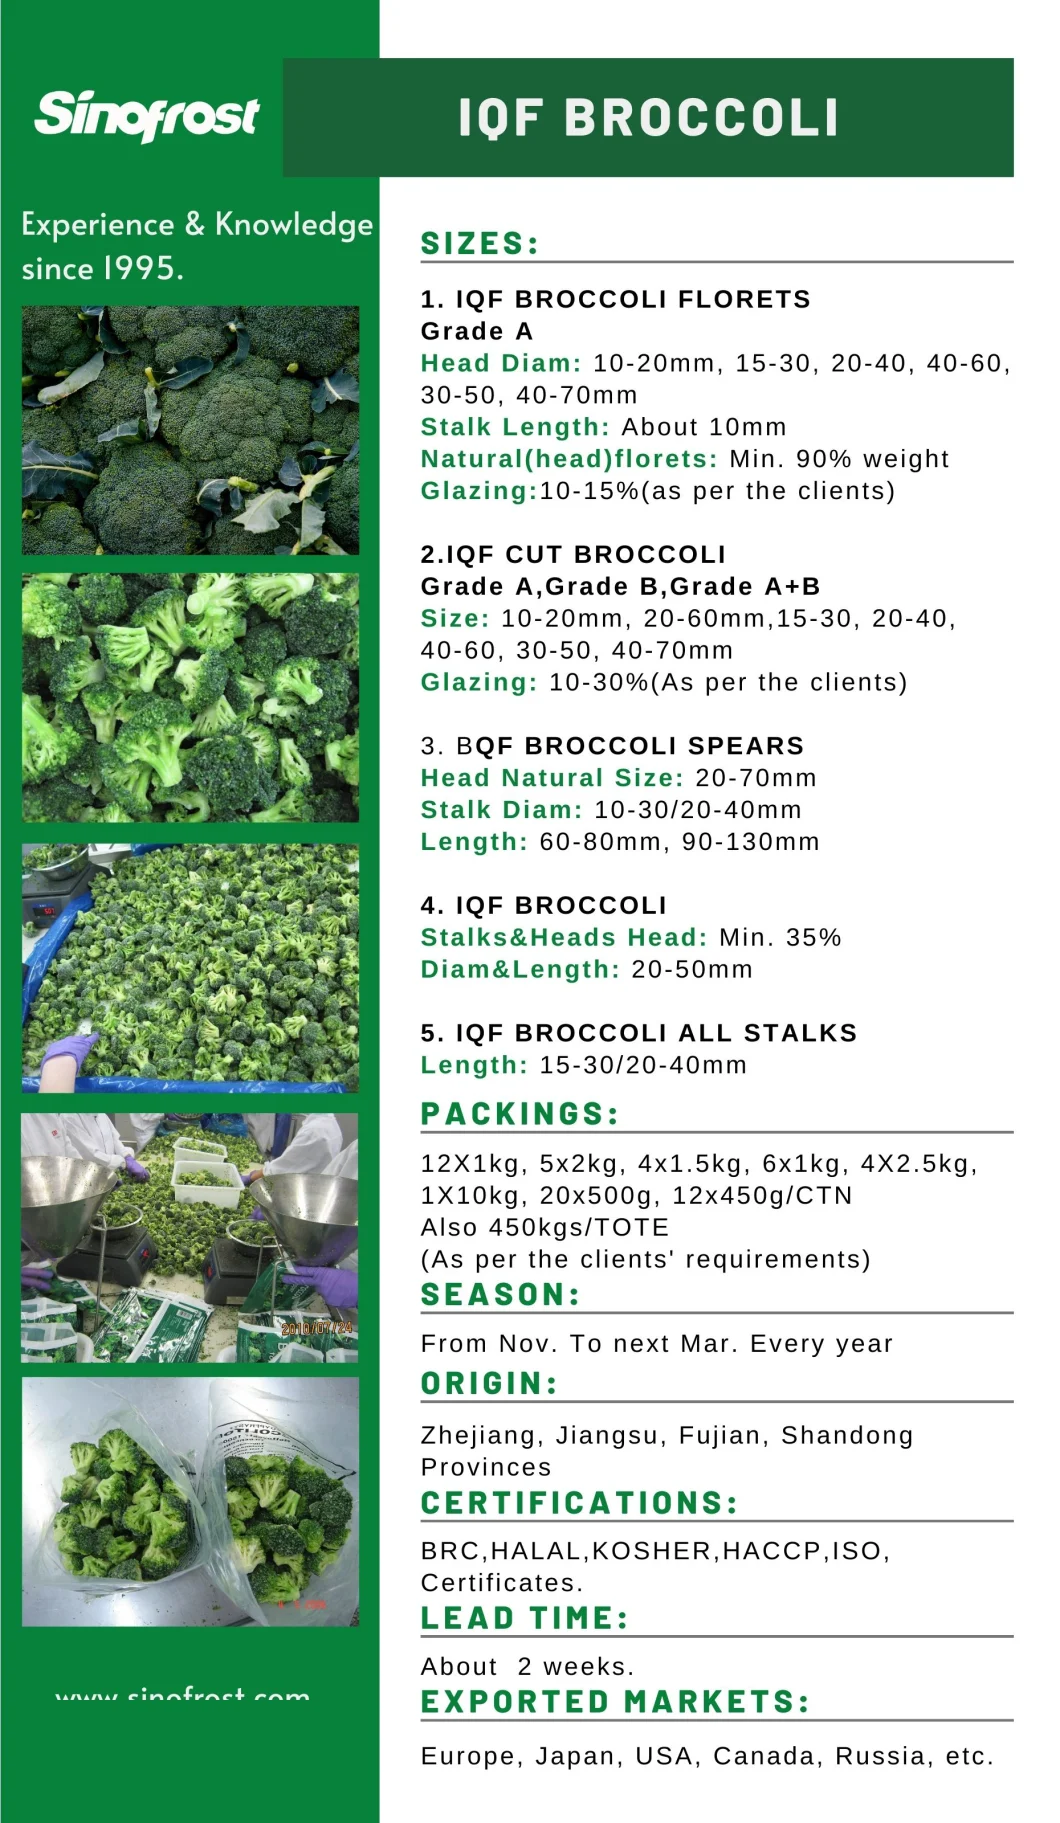 New Crop, IQF Broccoli, Frozen Broccoli, IQF Broccoli Florets, IQF Cut Broccoli, Bqf Broccoli Spears, Frozen Broccoli Florets, Frozen Broccoli Stalks, Brc/Halal